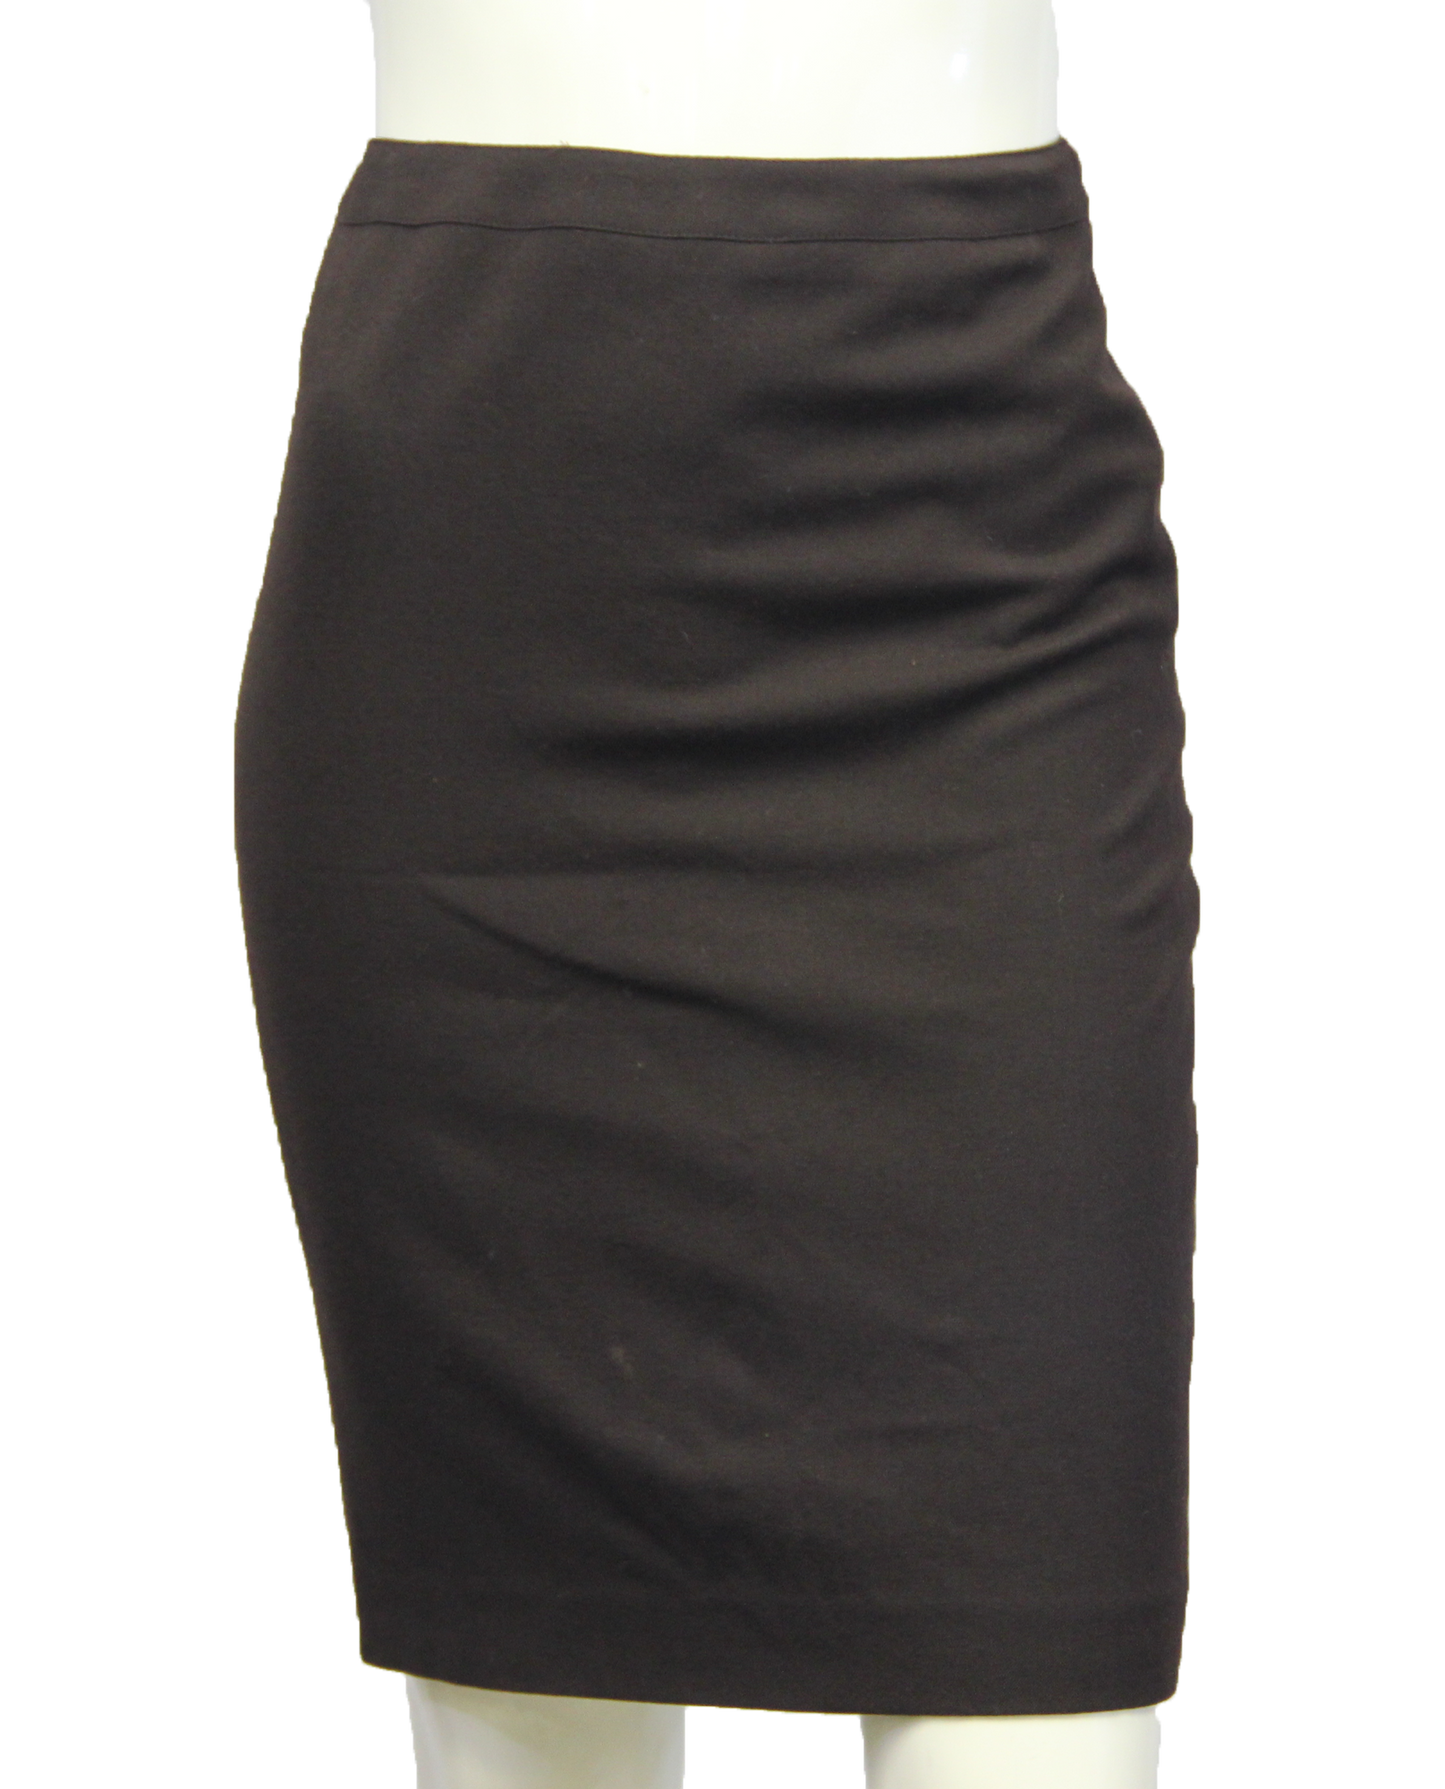 Ellen Tracy Work It Brown Skirt Size 2p (SKU 000094) - Designers On A Dime - 1